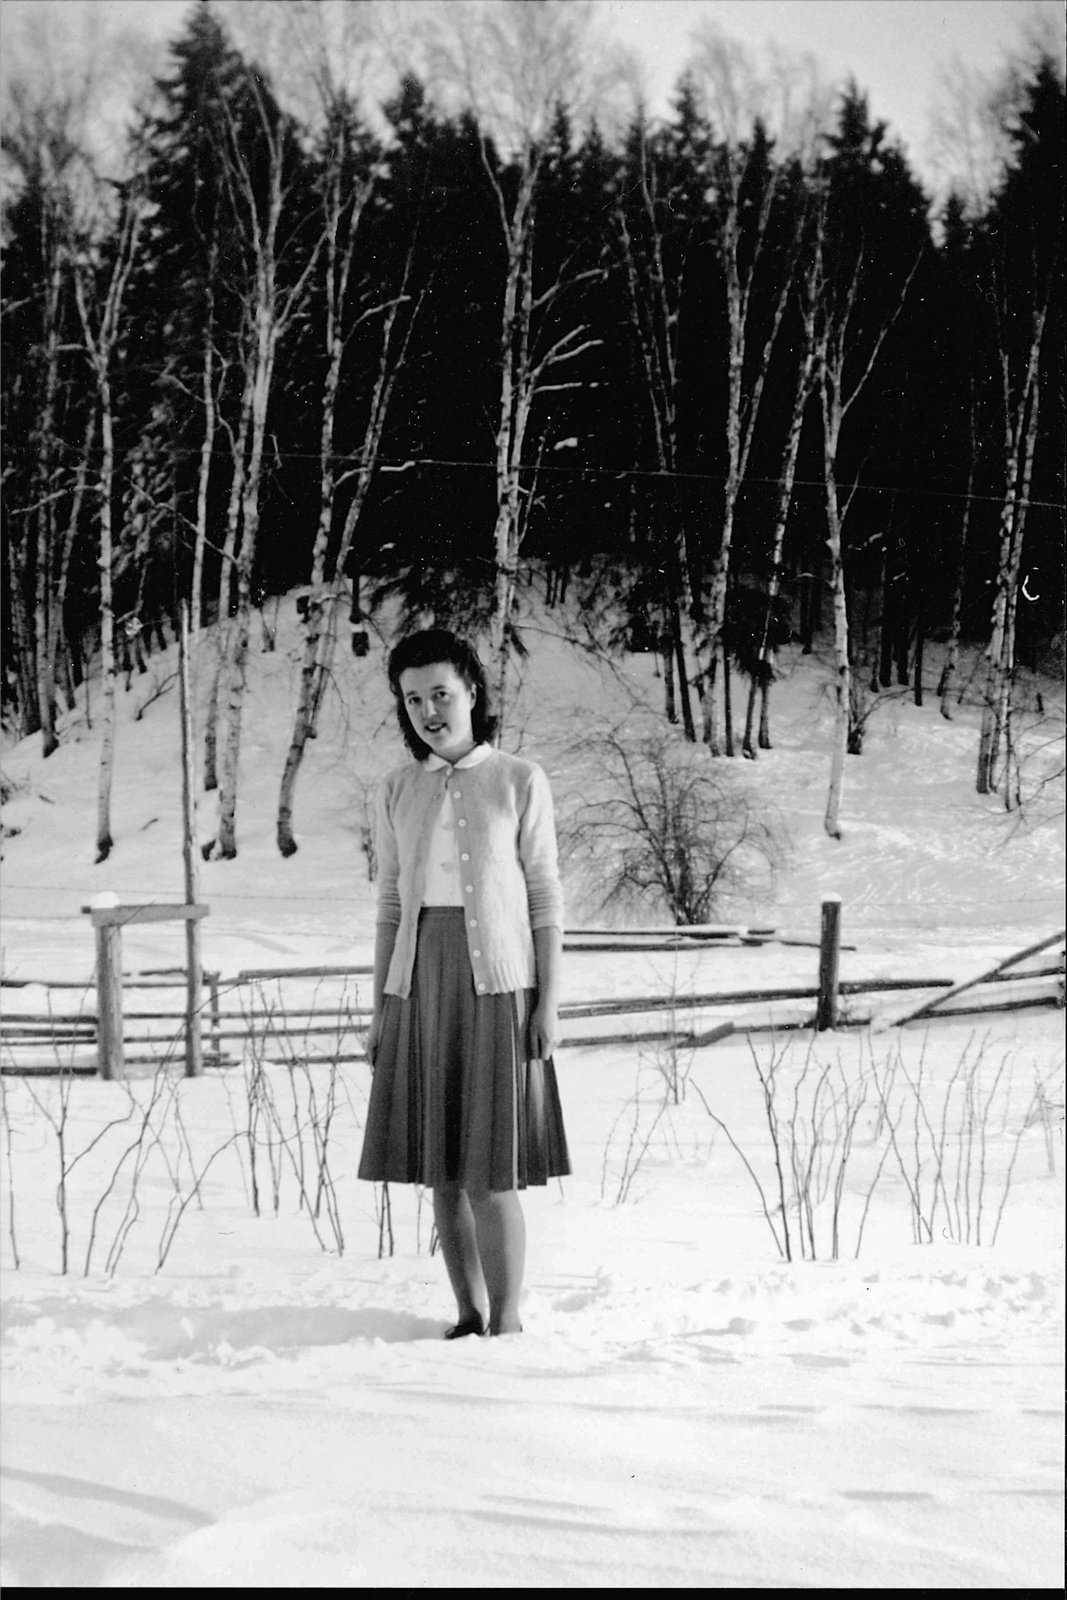 Audrey standing in snow.